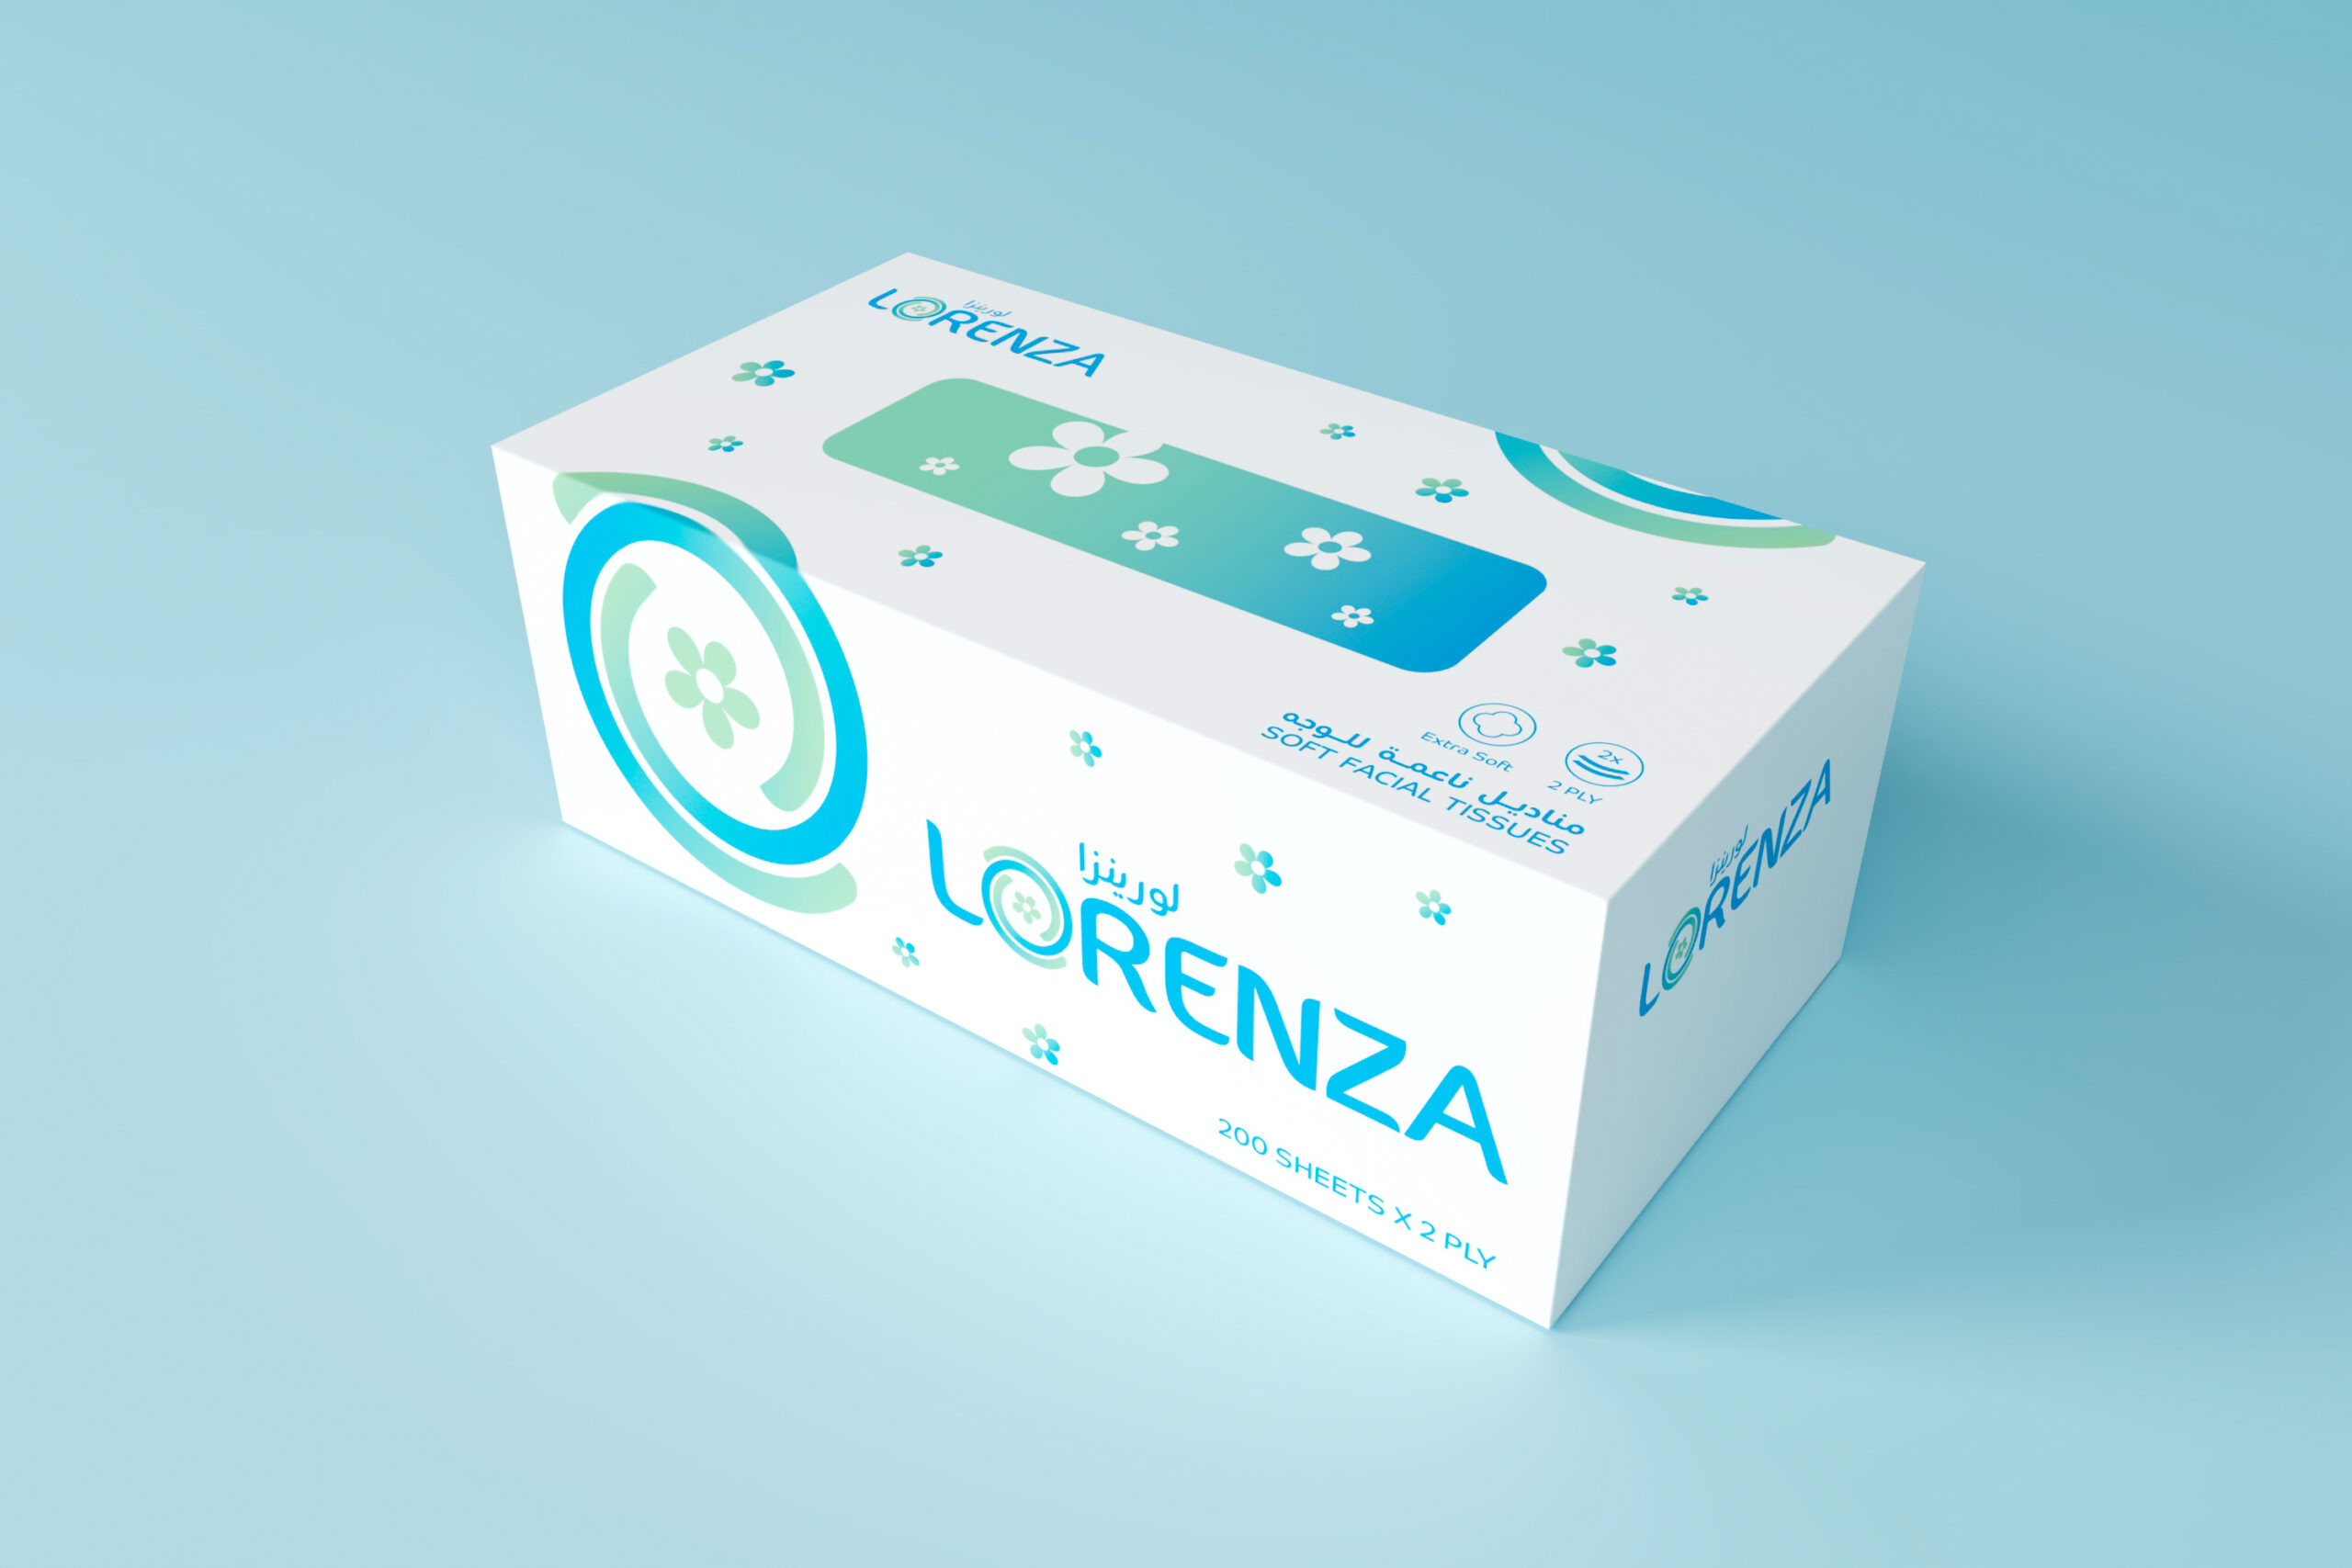 Lorenza Facial Tissue Box Sheet Size 19x19cm Number PLY 2 SKU 200 Sheet